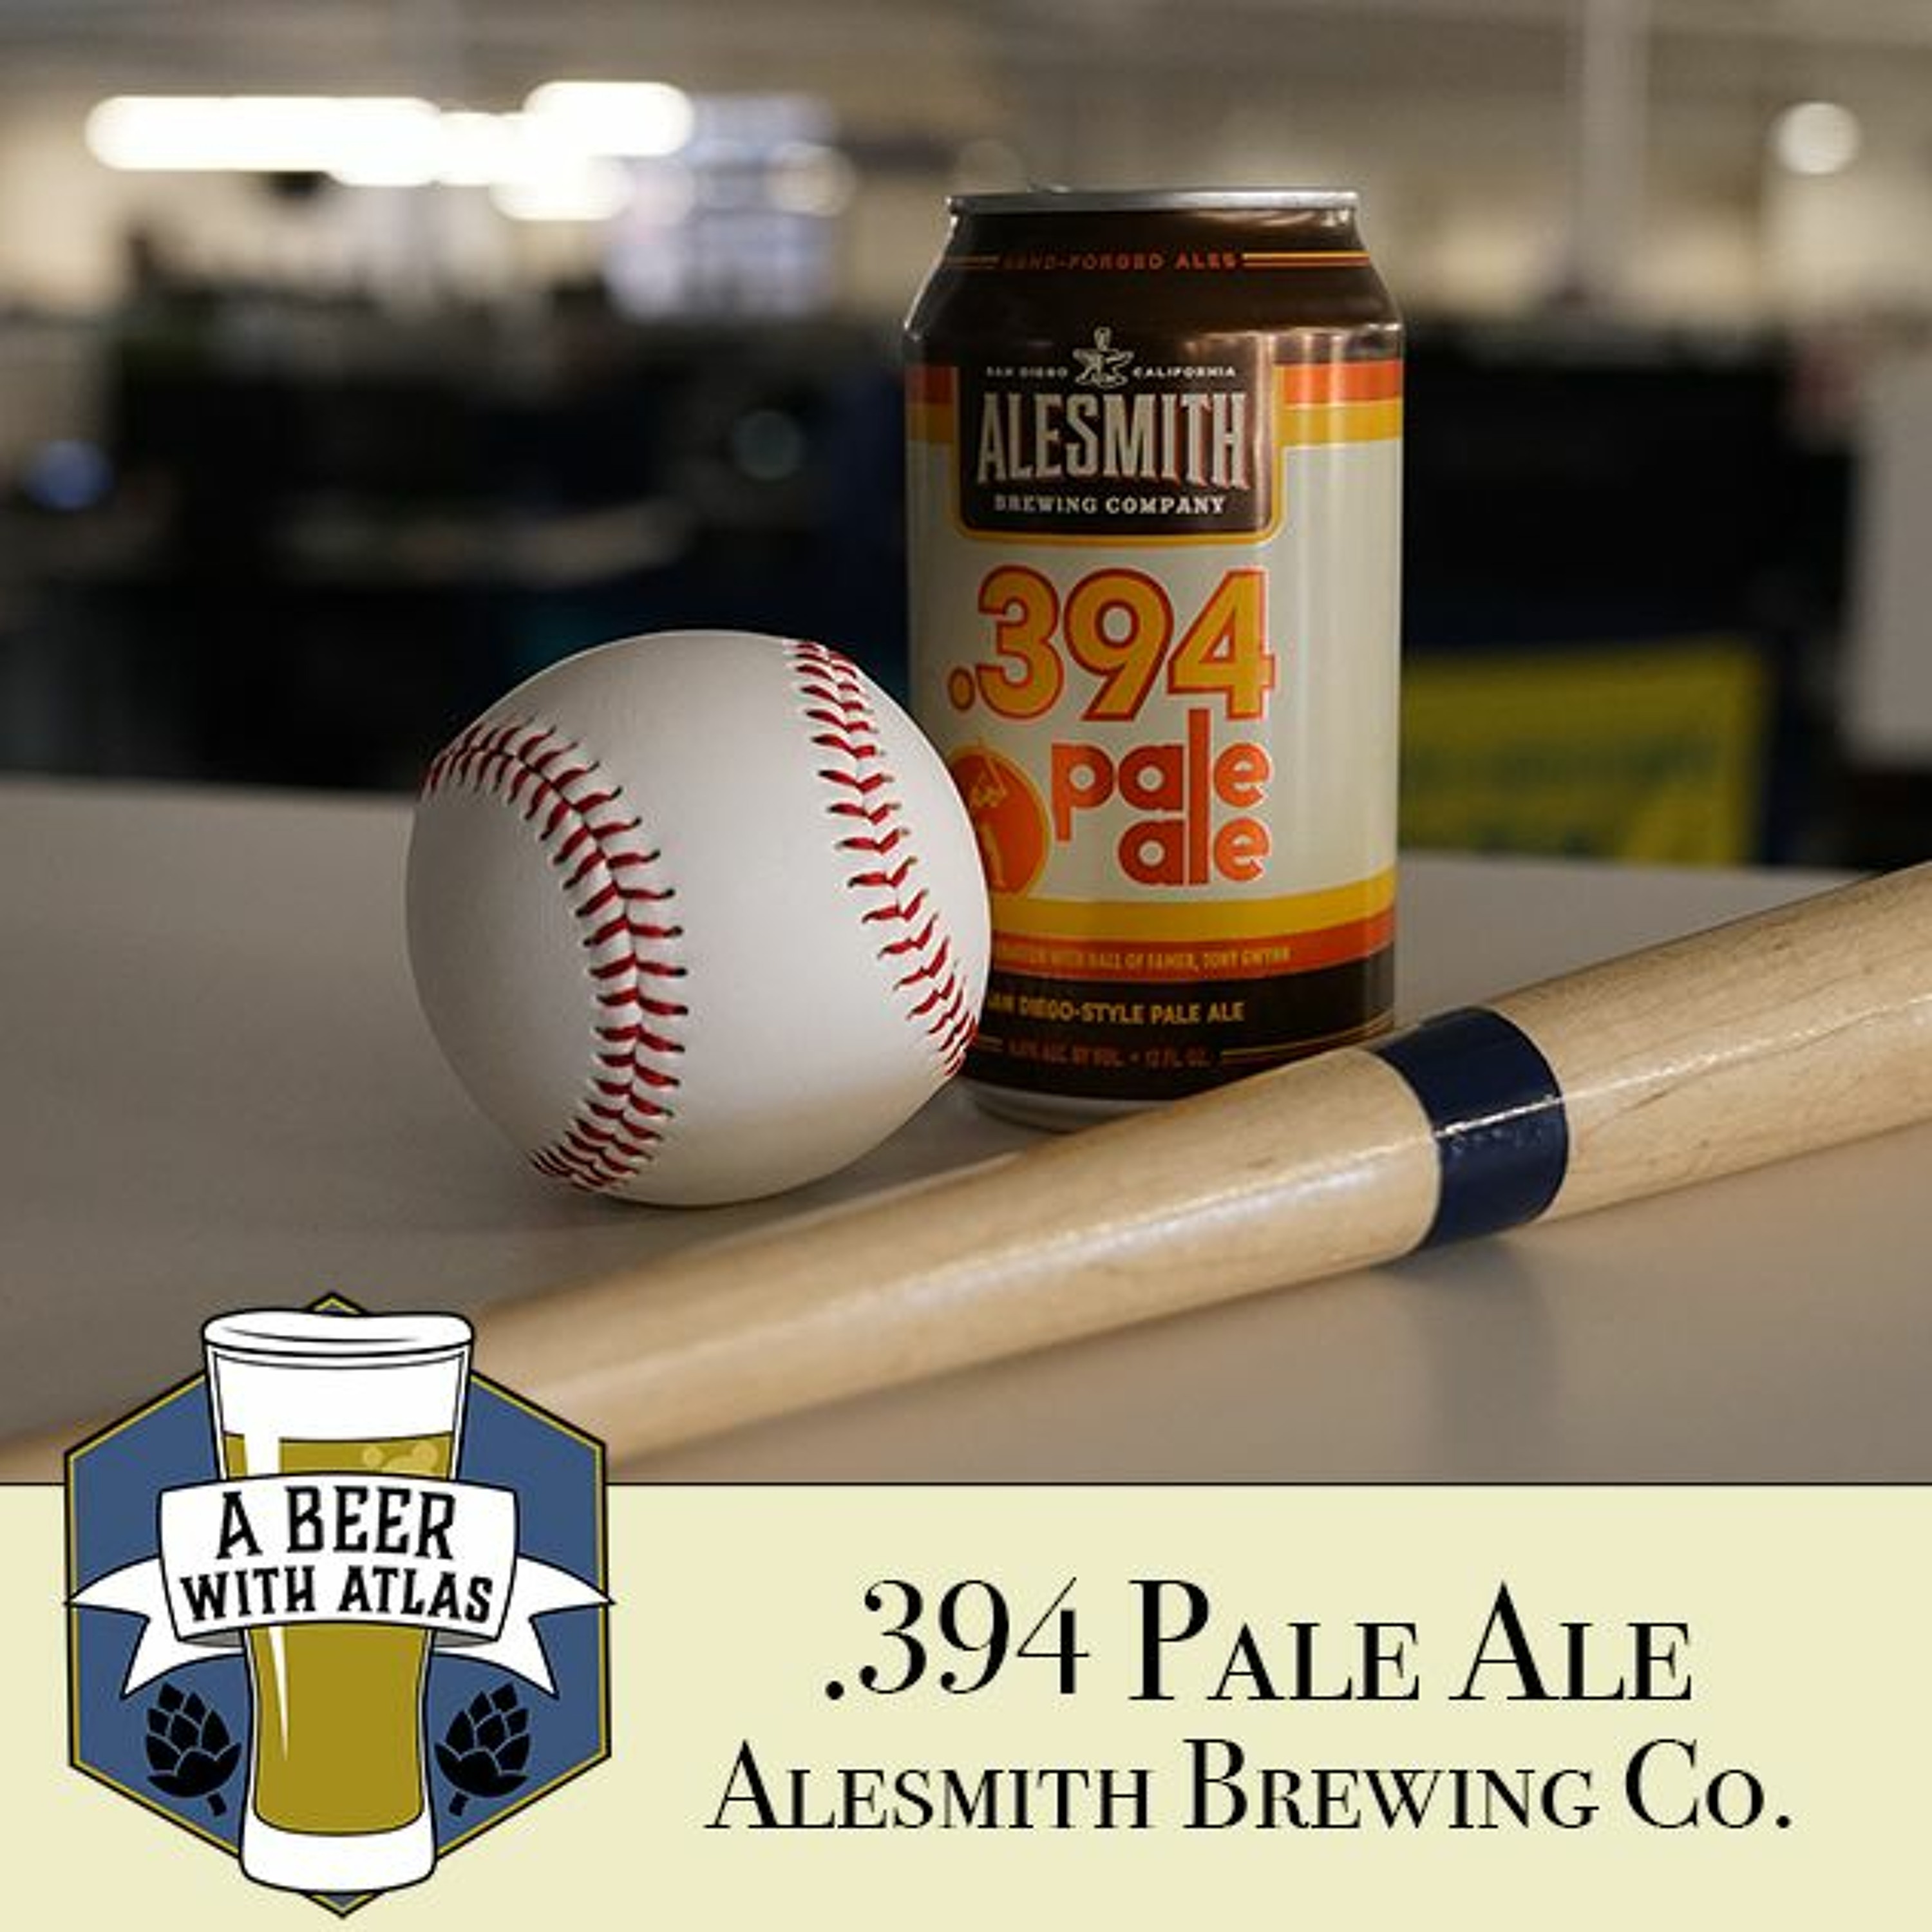 .394 Pale Ale | Tony Gwynn | AleSmith Brewing Company - A Beer With Atlas 133